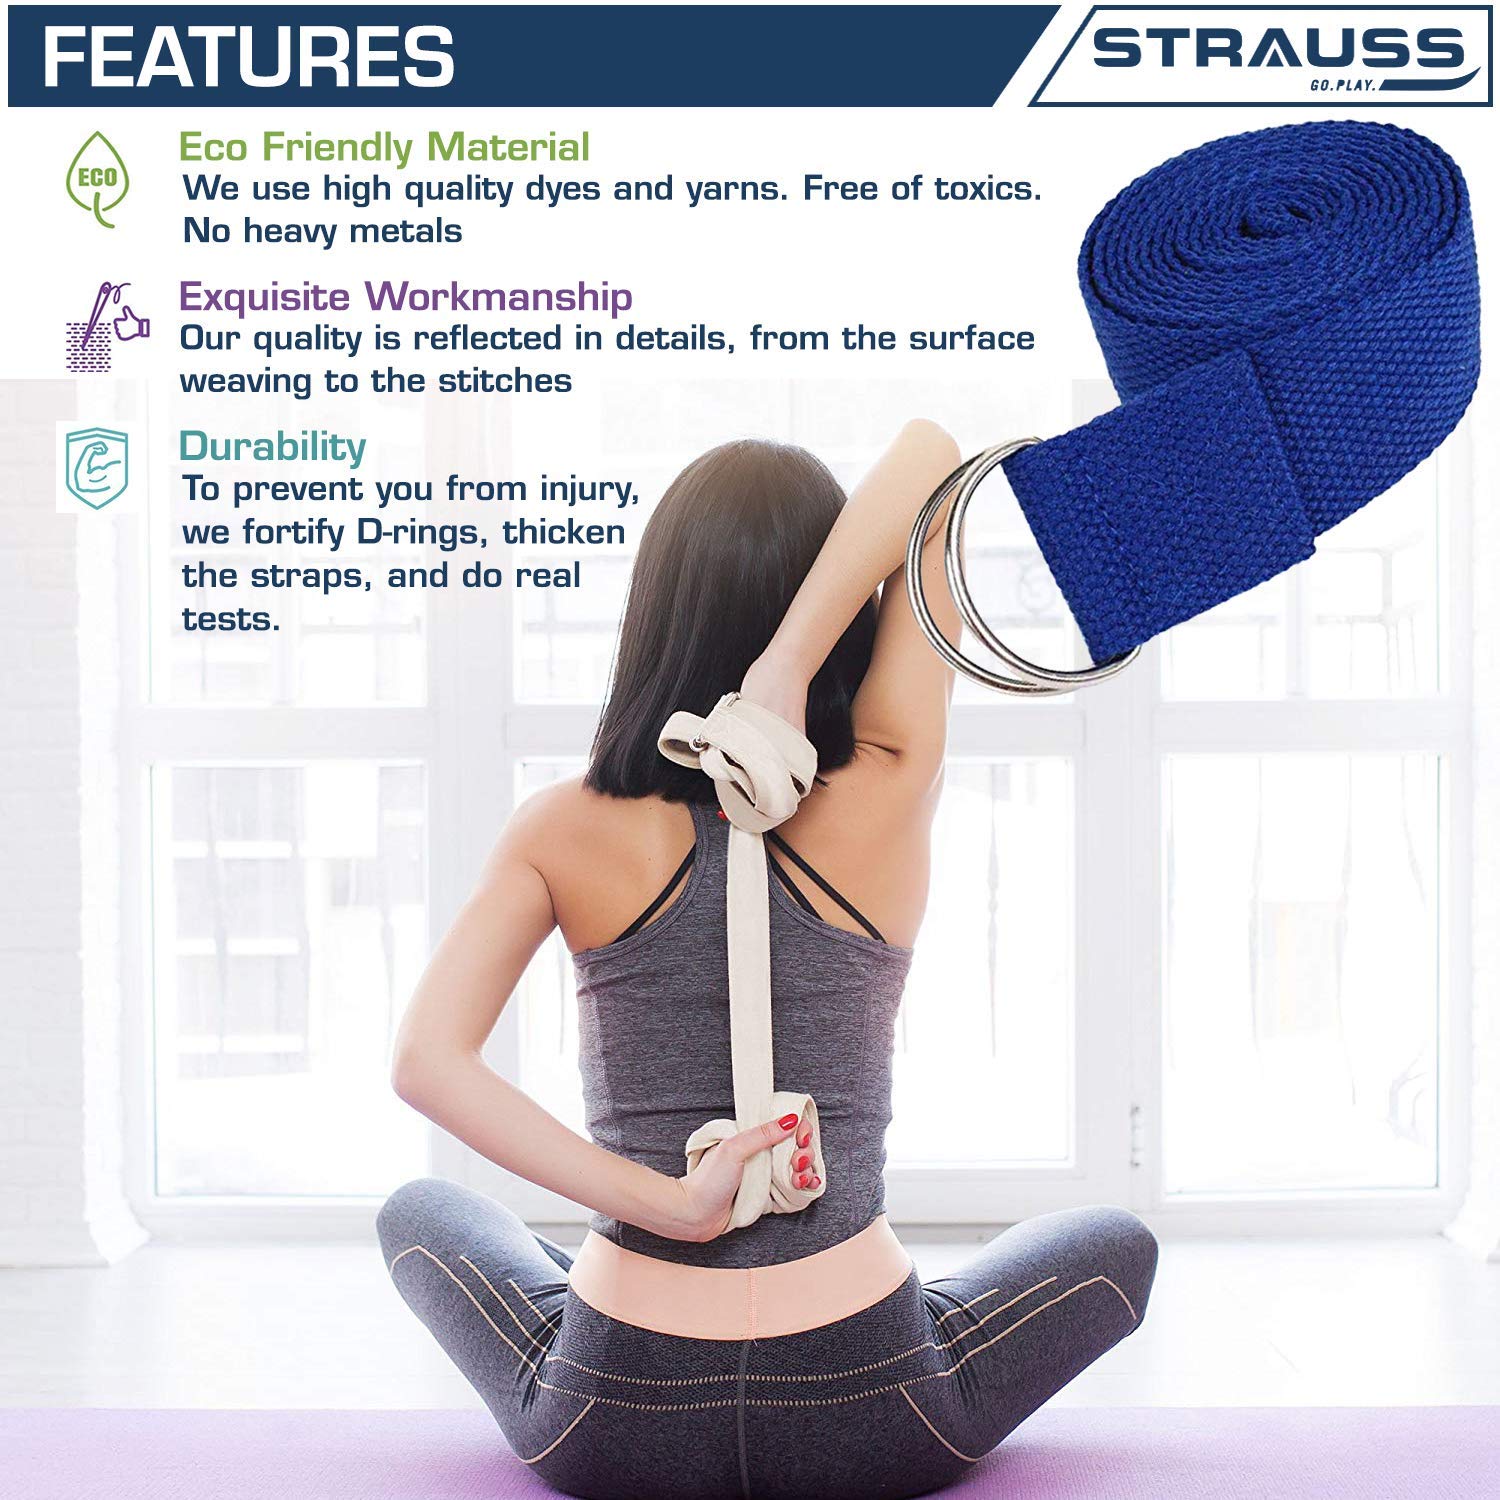 Strauss Lightweight Eco Friendly Yoga Mat 6 mm (Blue), Yoga Block (Navy Blue) Pair and Yoga Belt (Blue)